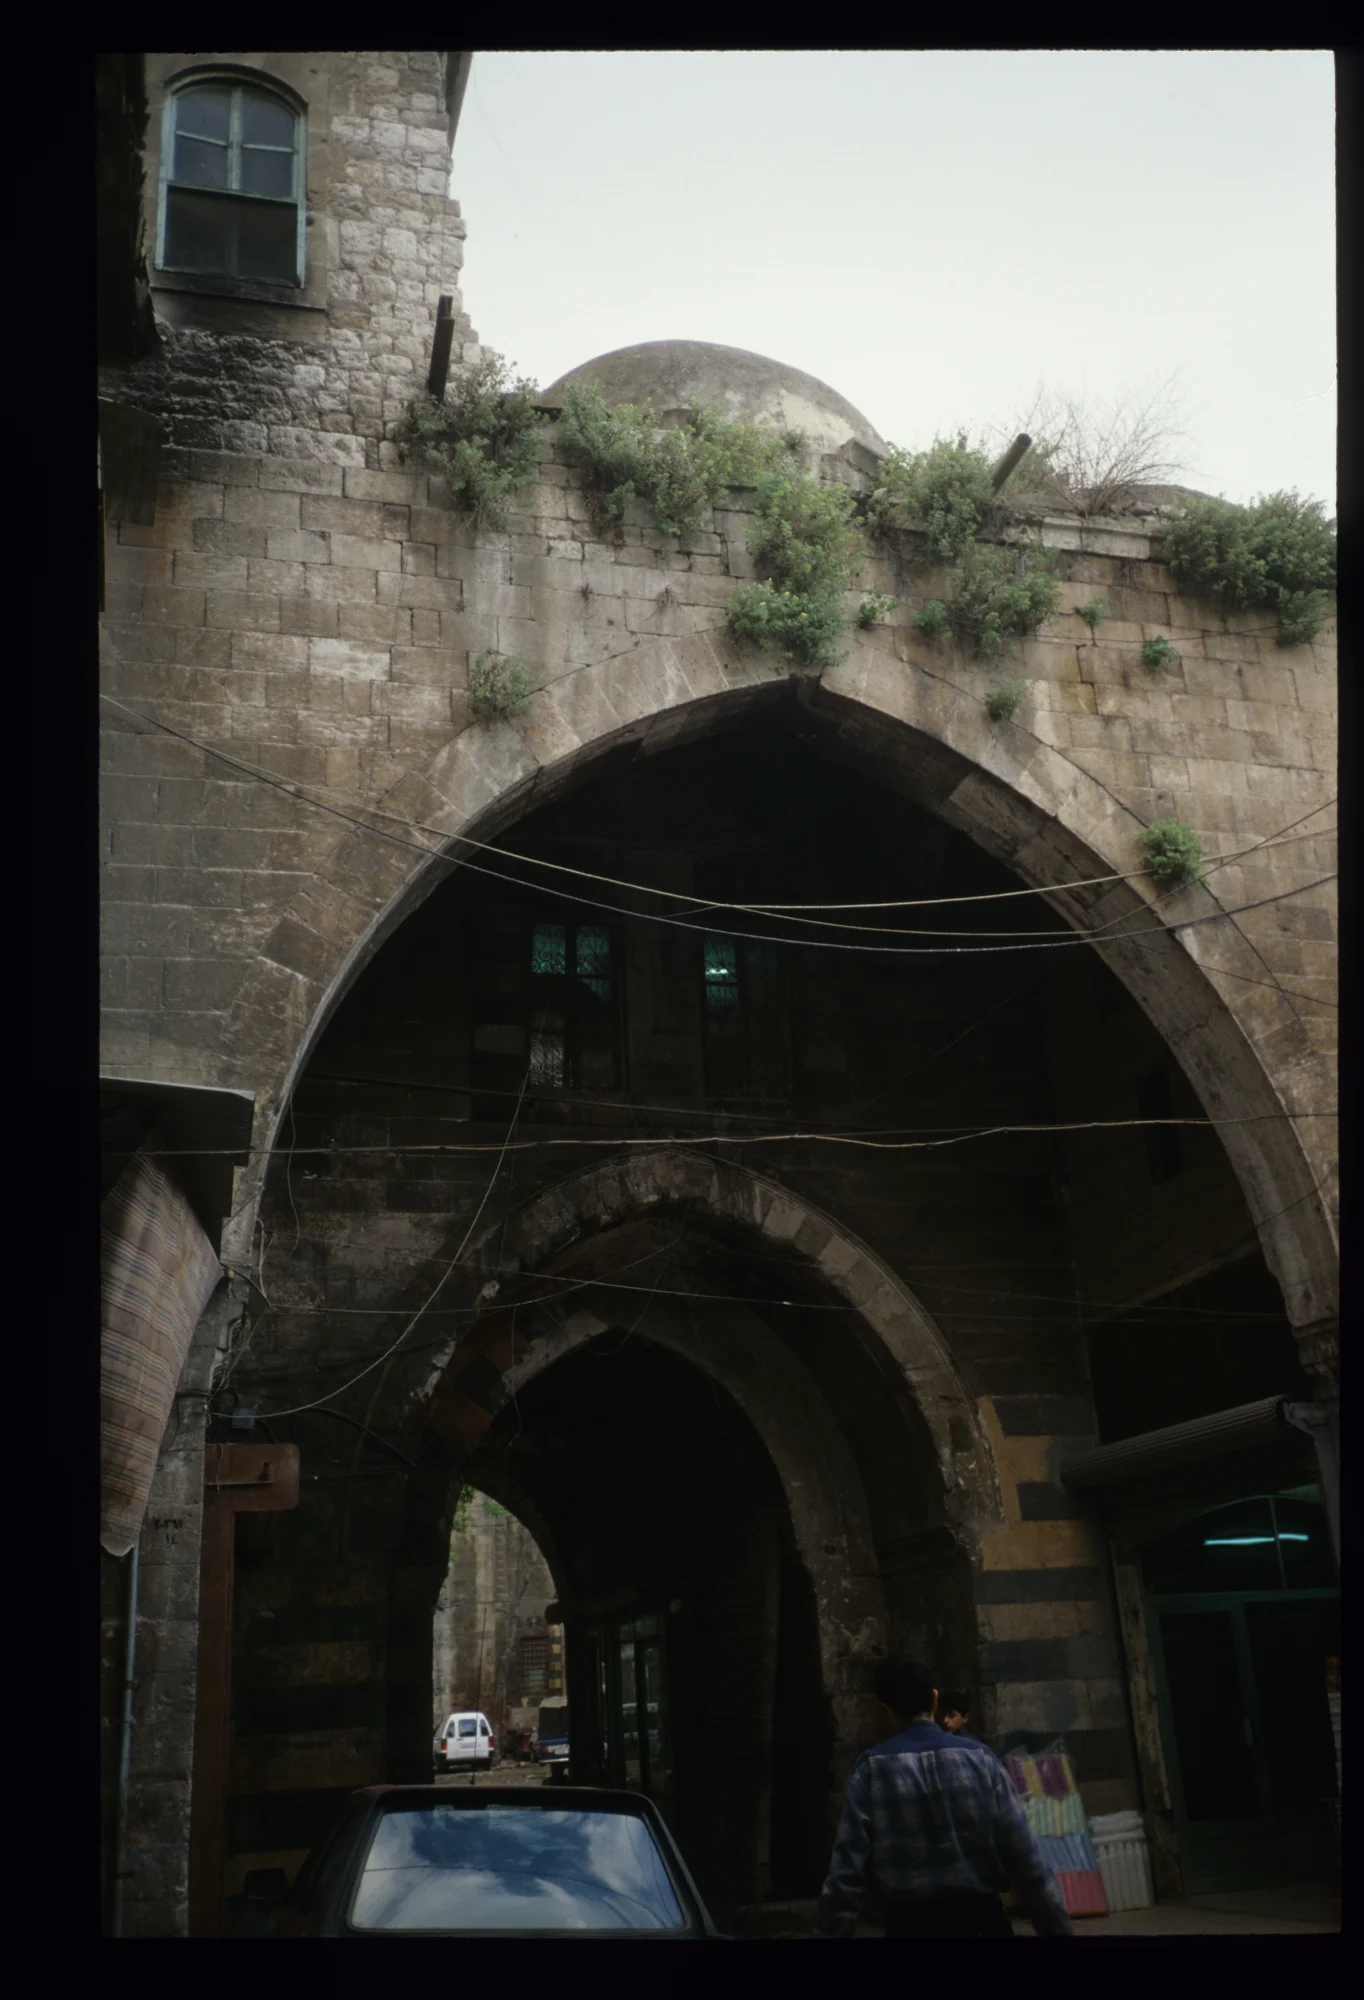 Khan Qurdbak, main entrance